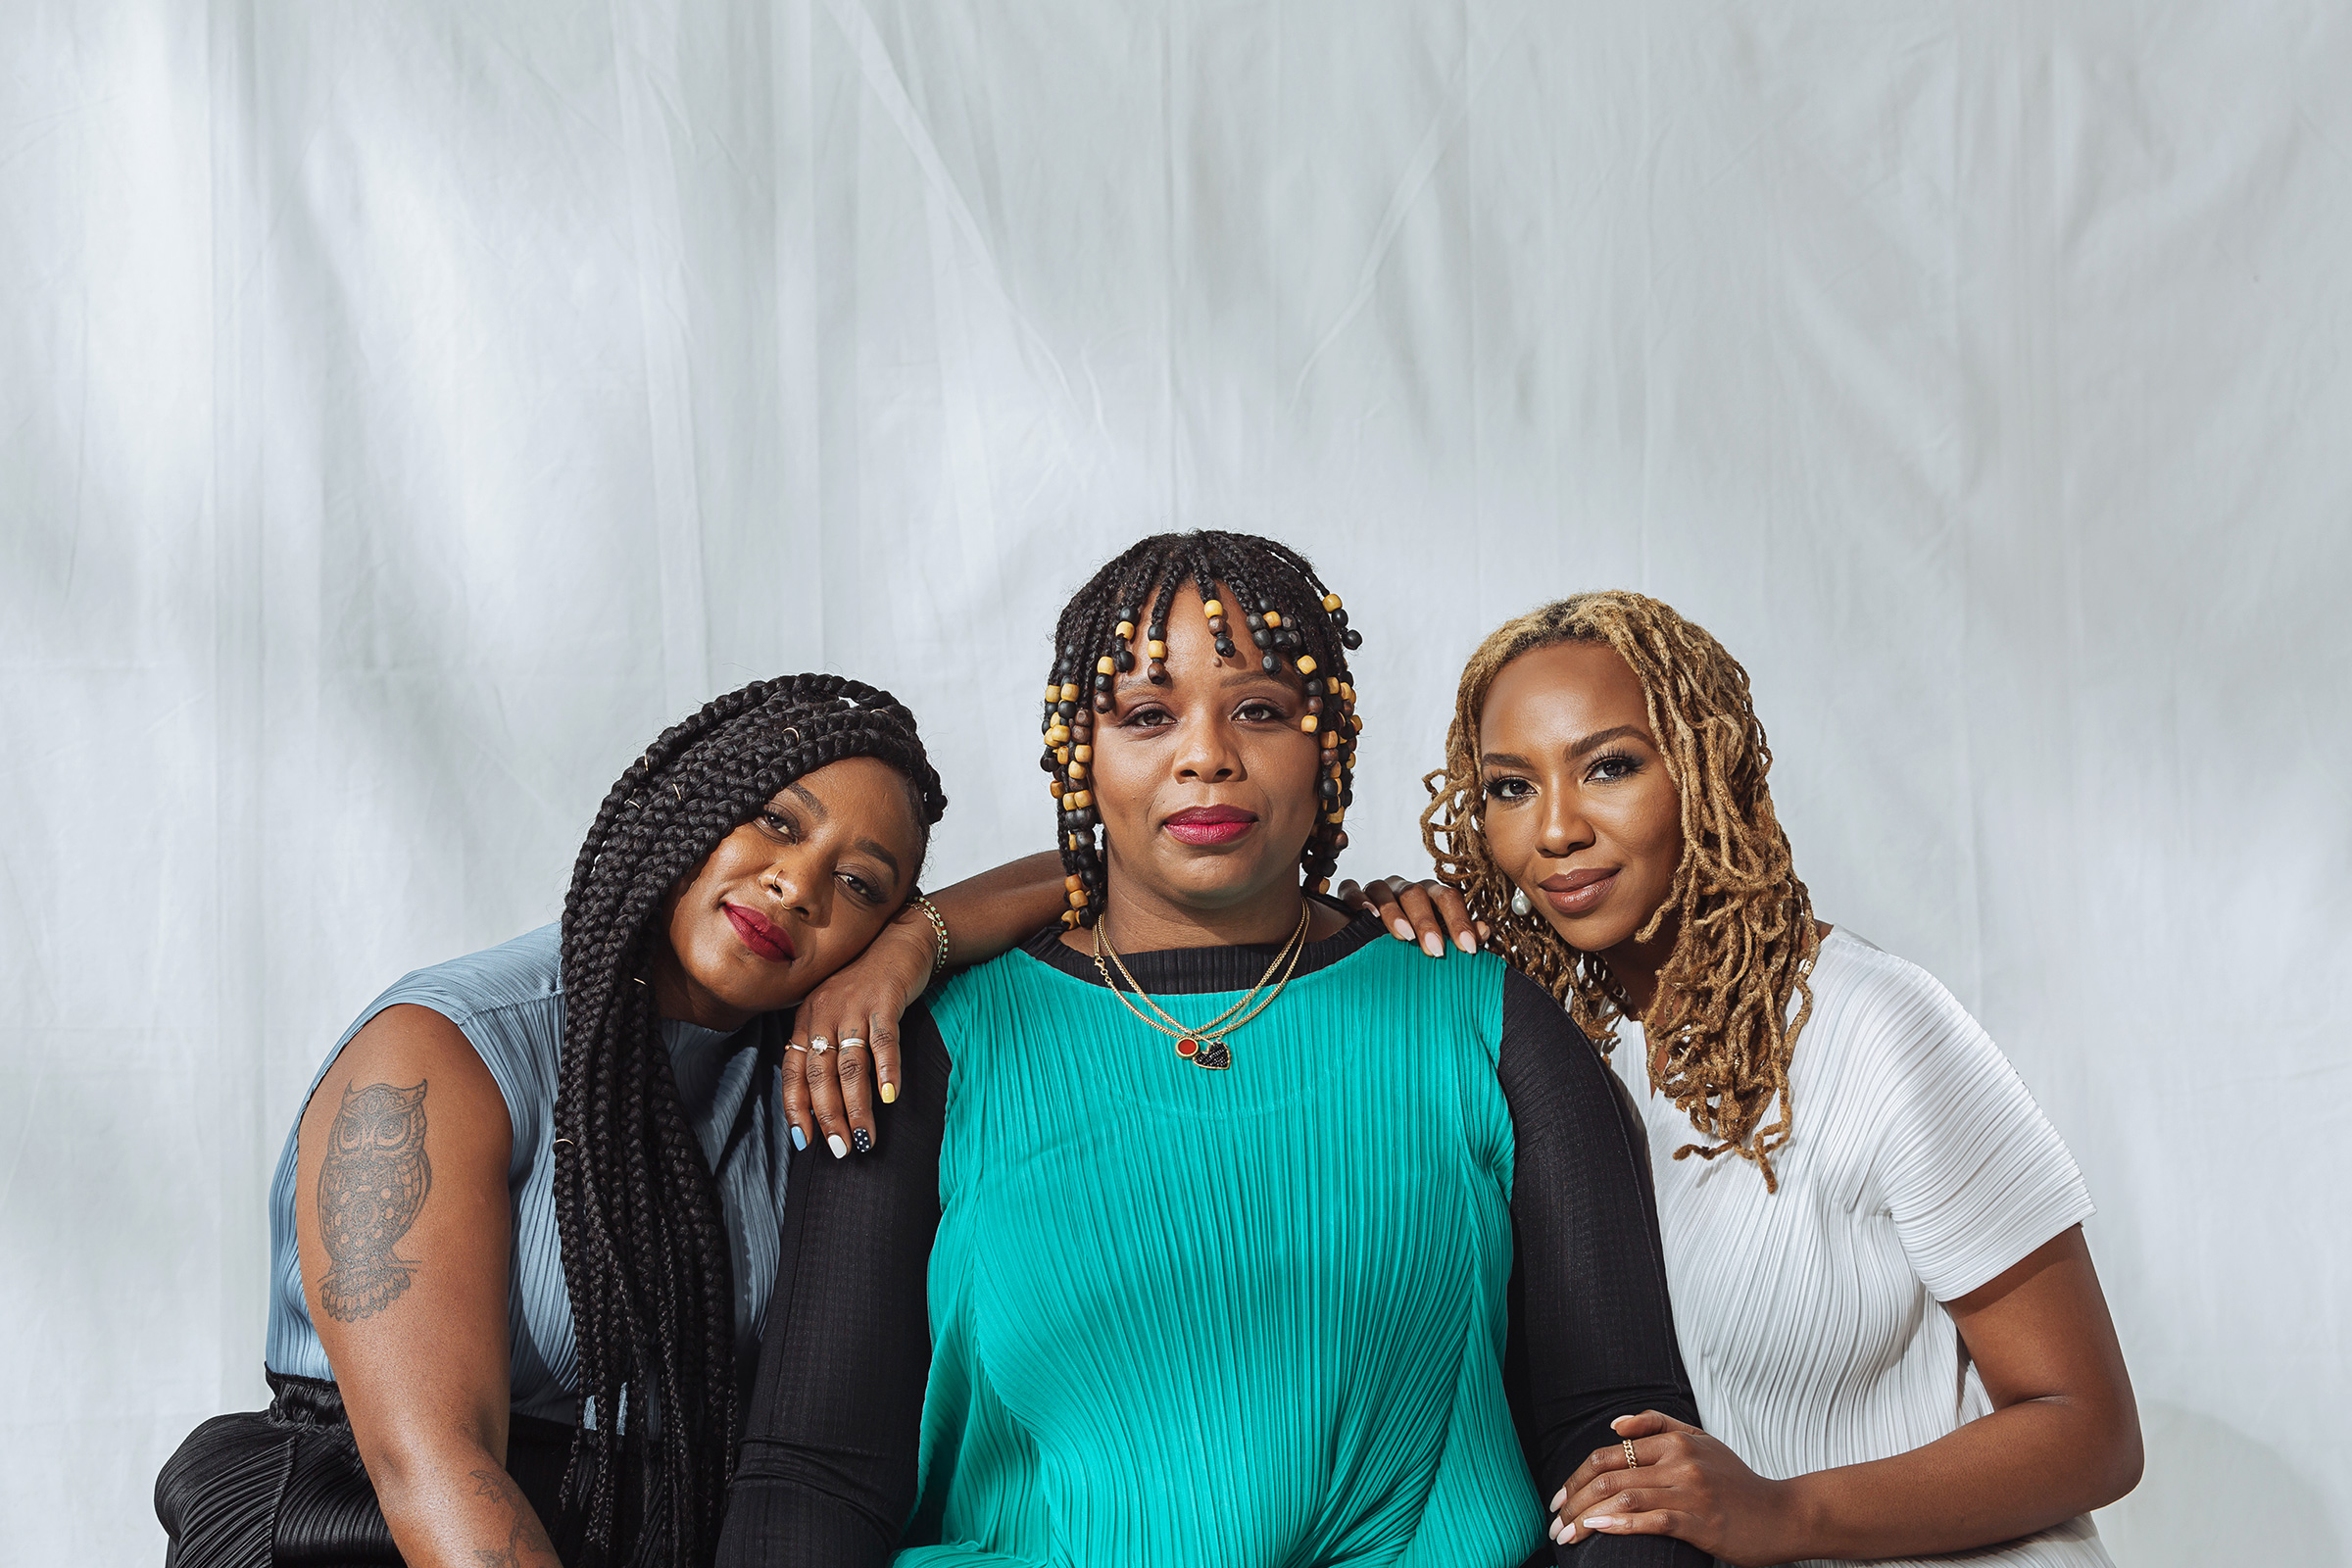 TIME 100 Icons: Black Lives Matter - Alicia Garza, Opal Tometi, Patrisse Cullors